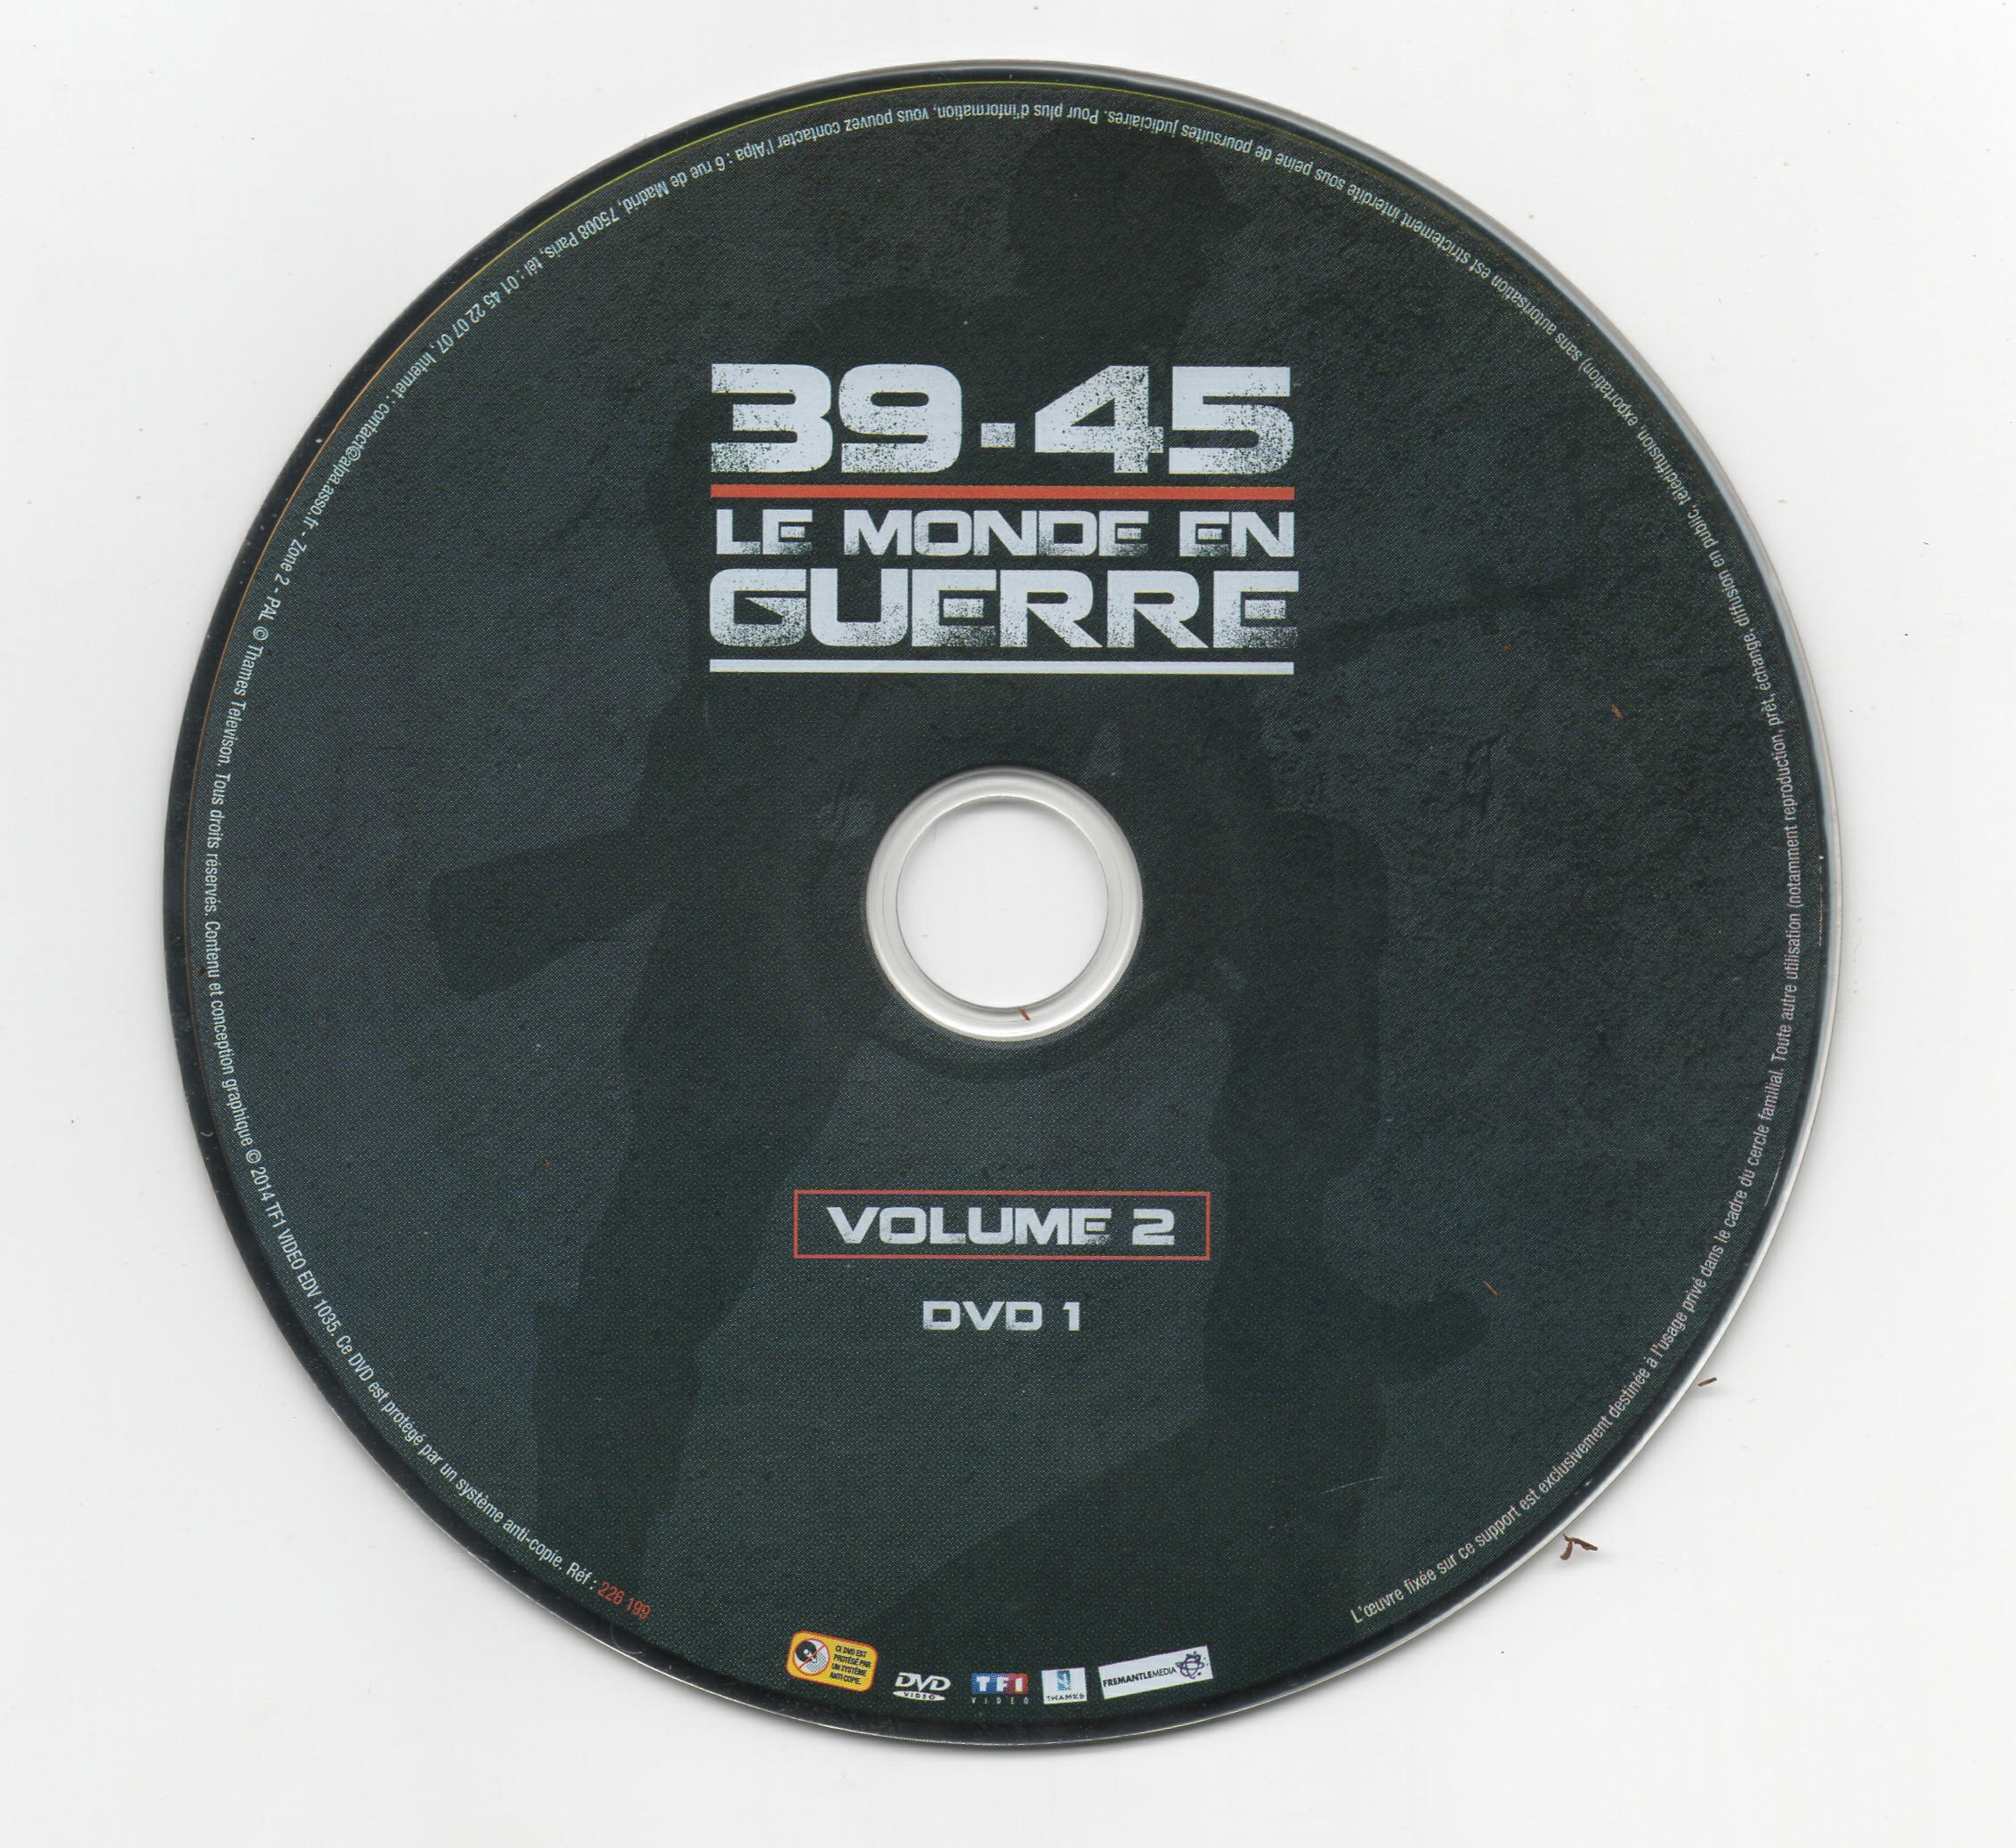 39-45 Le monde en guerre vol 02 DISC 1